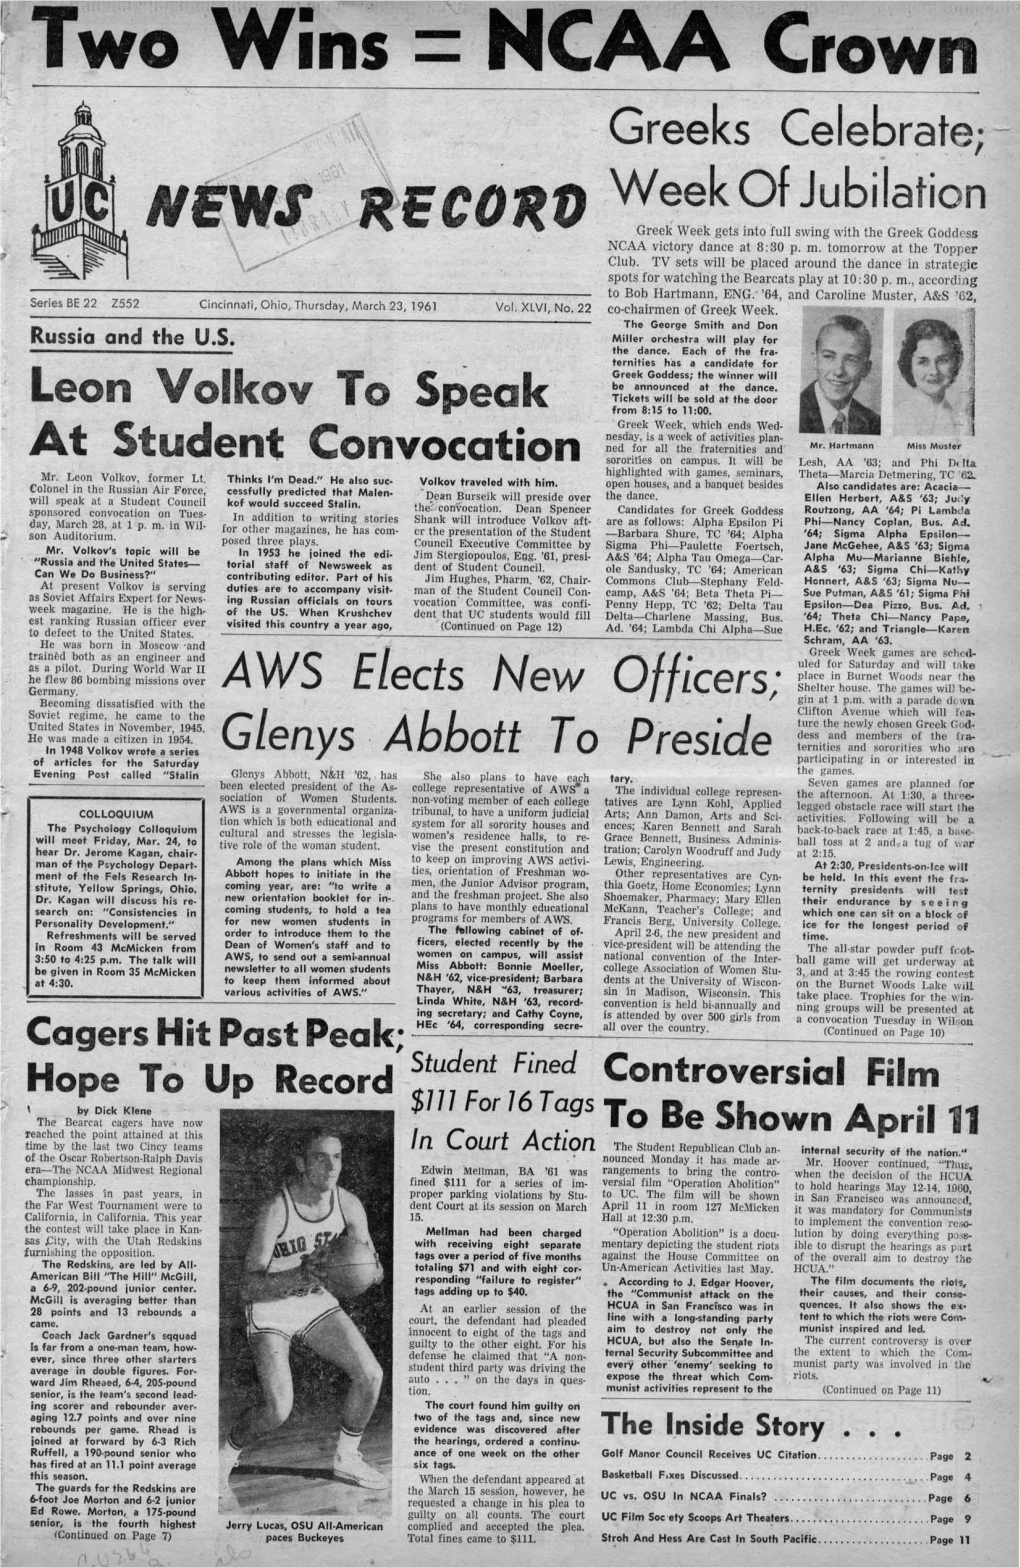 University of Cincinnati News Record. Thursday, March 23, 1961. Vol